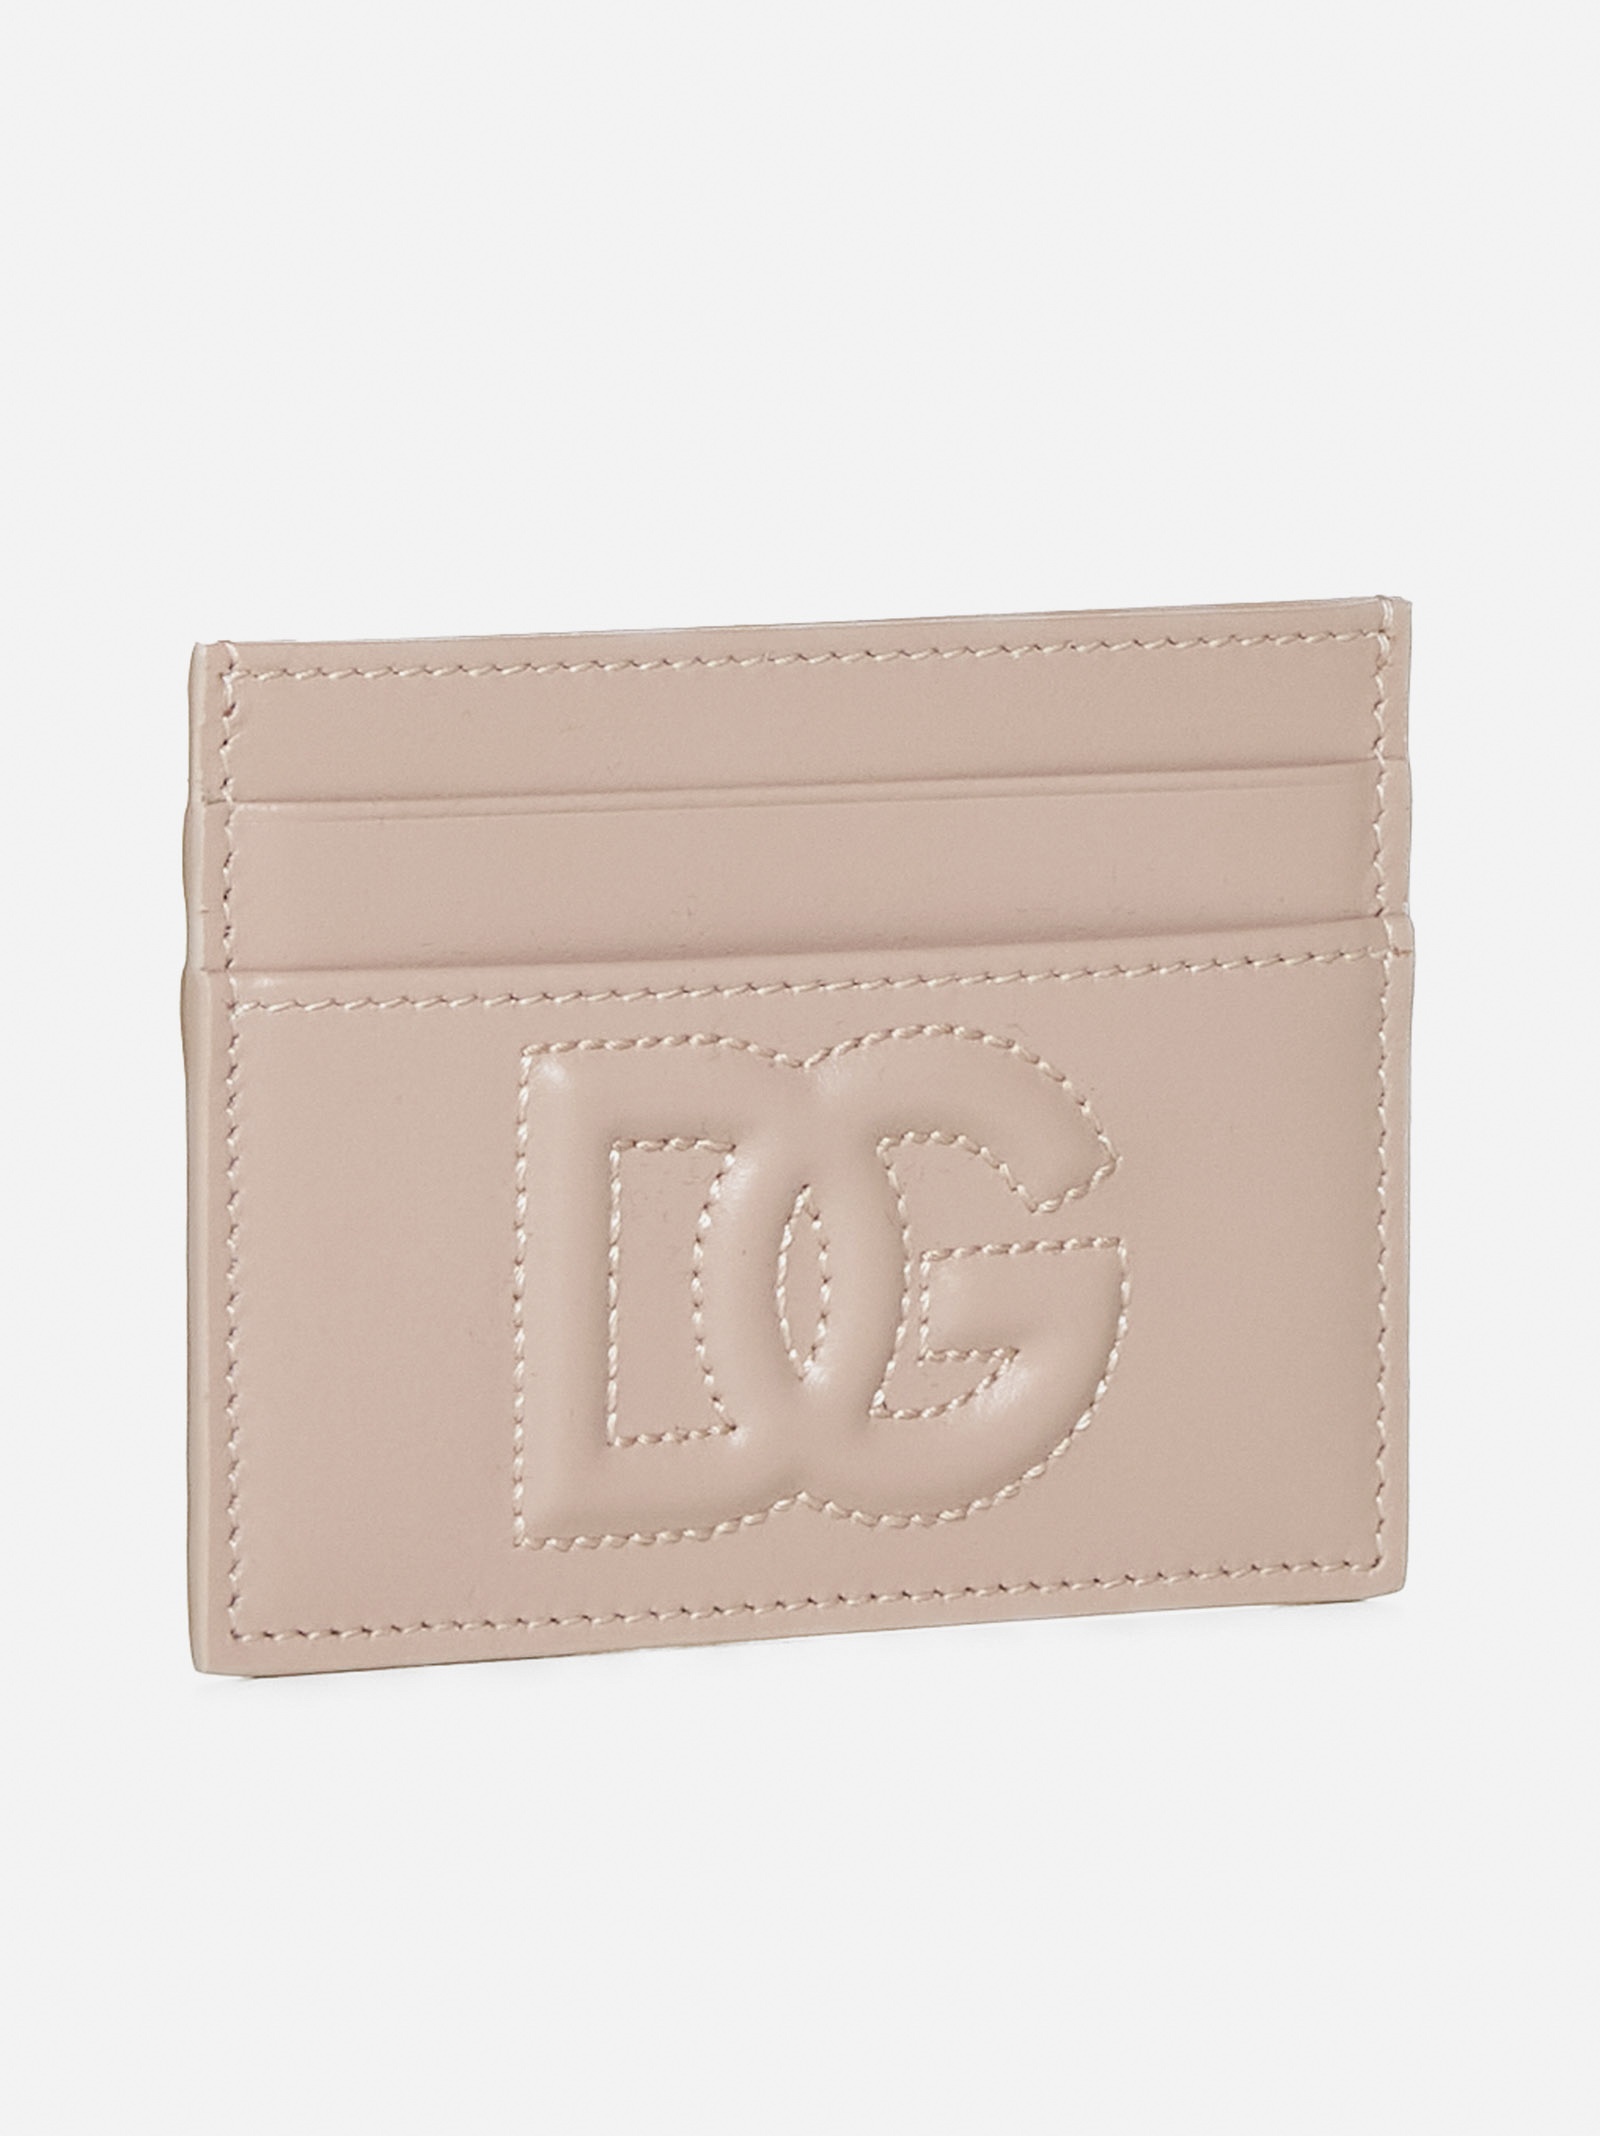 DG logo leather card holder - 2